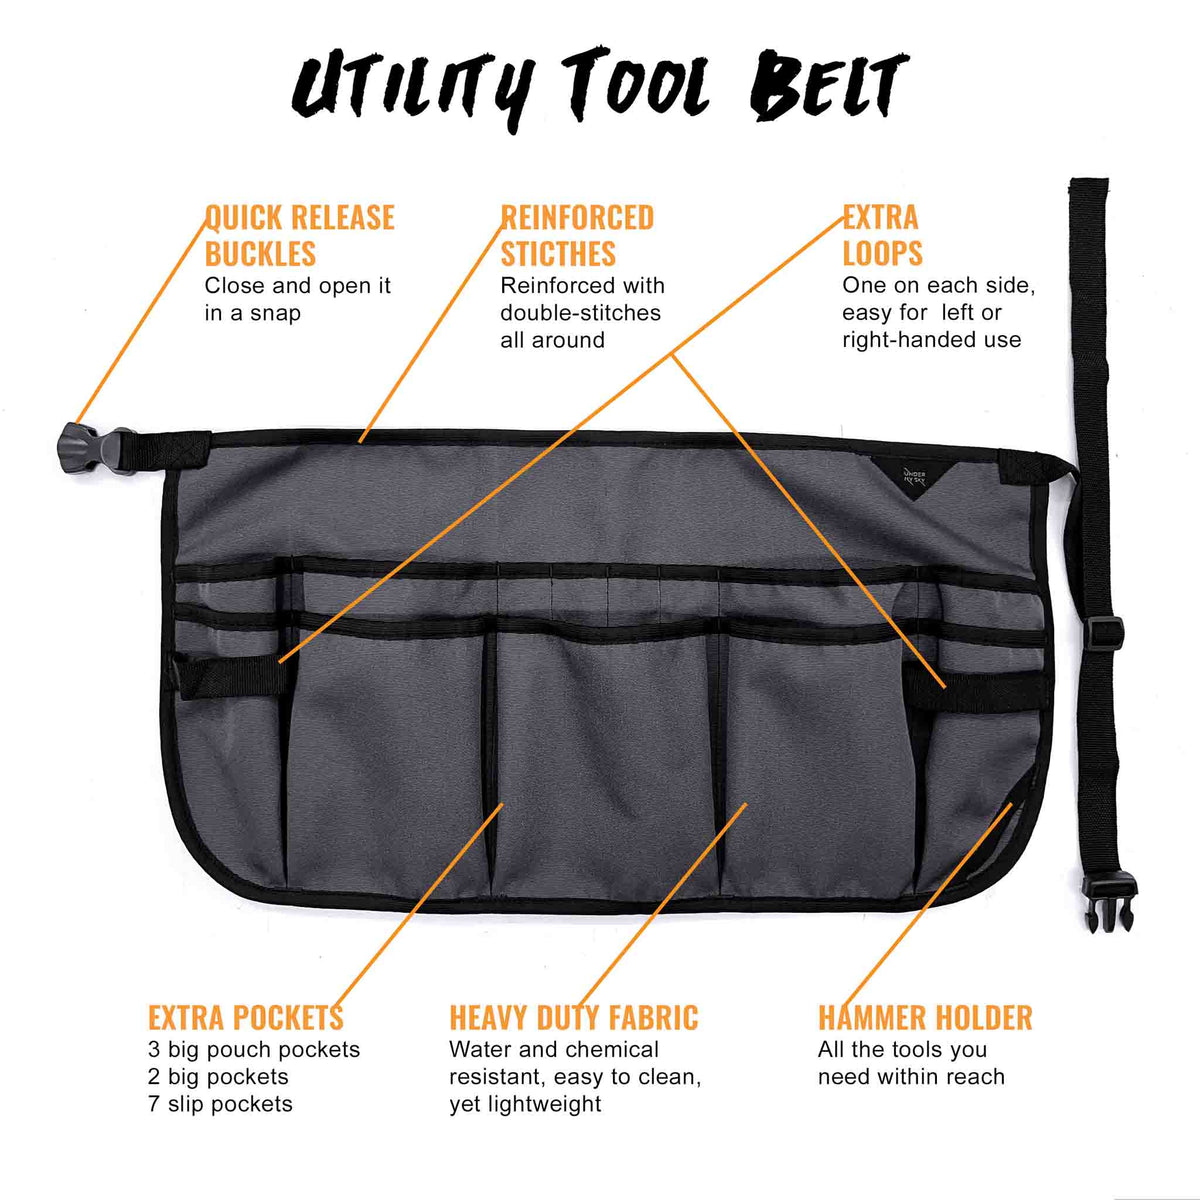 Tool Belt - 12 Pockets, 2 Loops, 1 Hammer Loop - Heavy Duty - Adjustable Pouch Apron - Mechanic, Shop, Electrician, Gardener, Makers - Under NY Sky